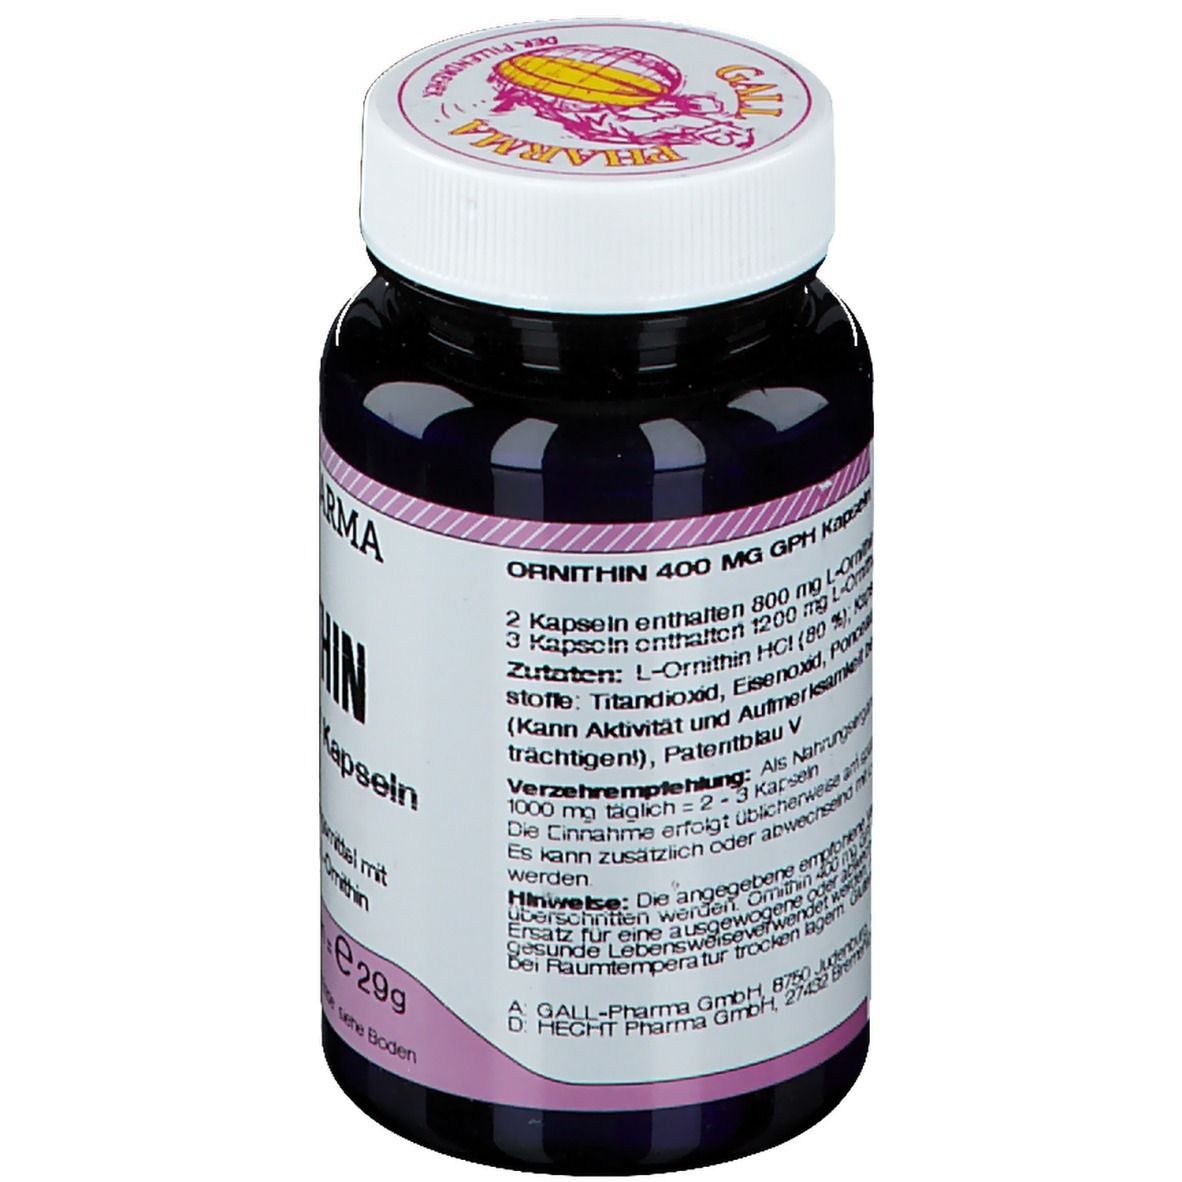 GALL PHARMA Ornithin 400 mg GPH Kapseln